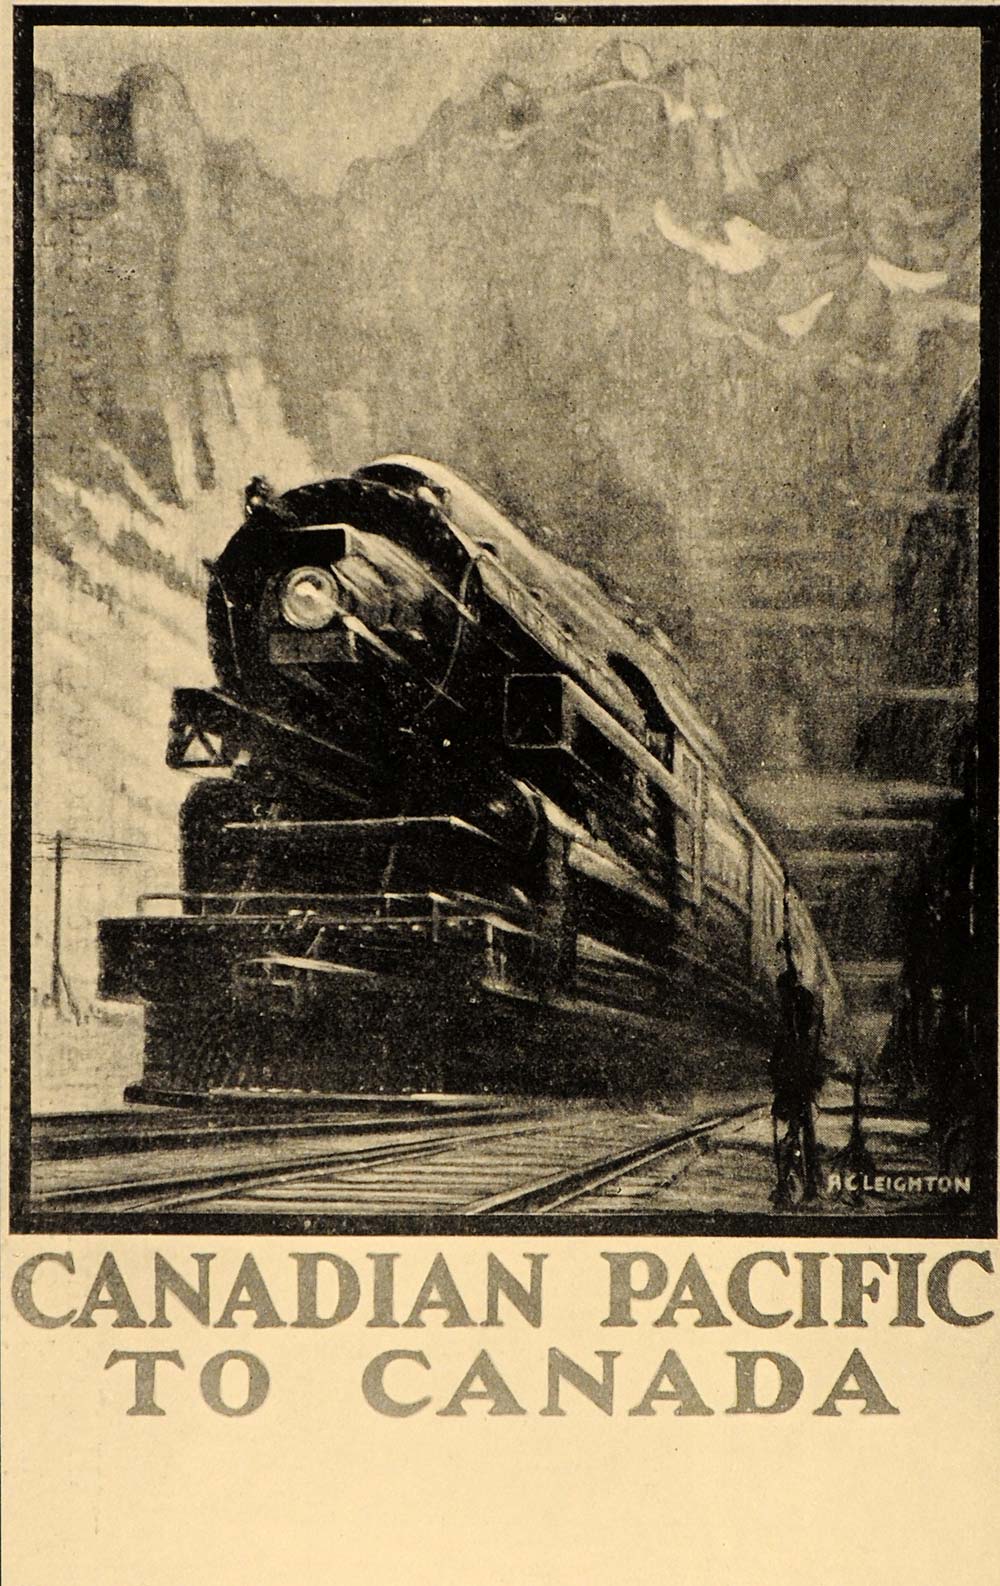 1933 A. C. Leighton Canadian Pacific Train Poster B/W ORIGINAL HISTORIC POSA6